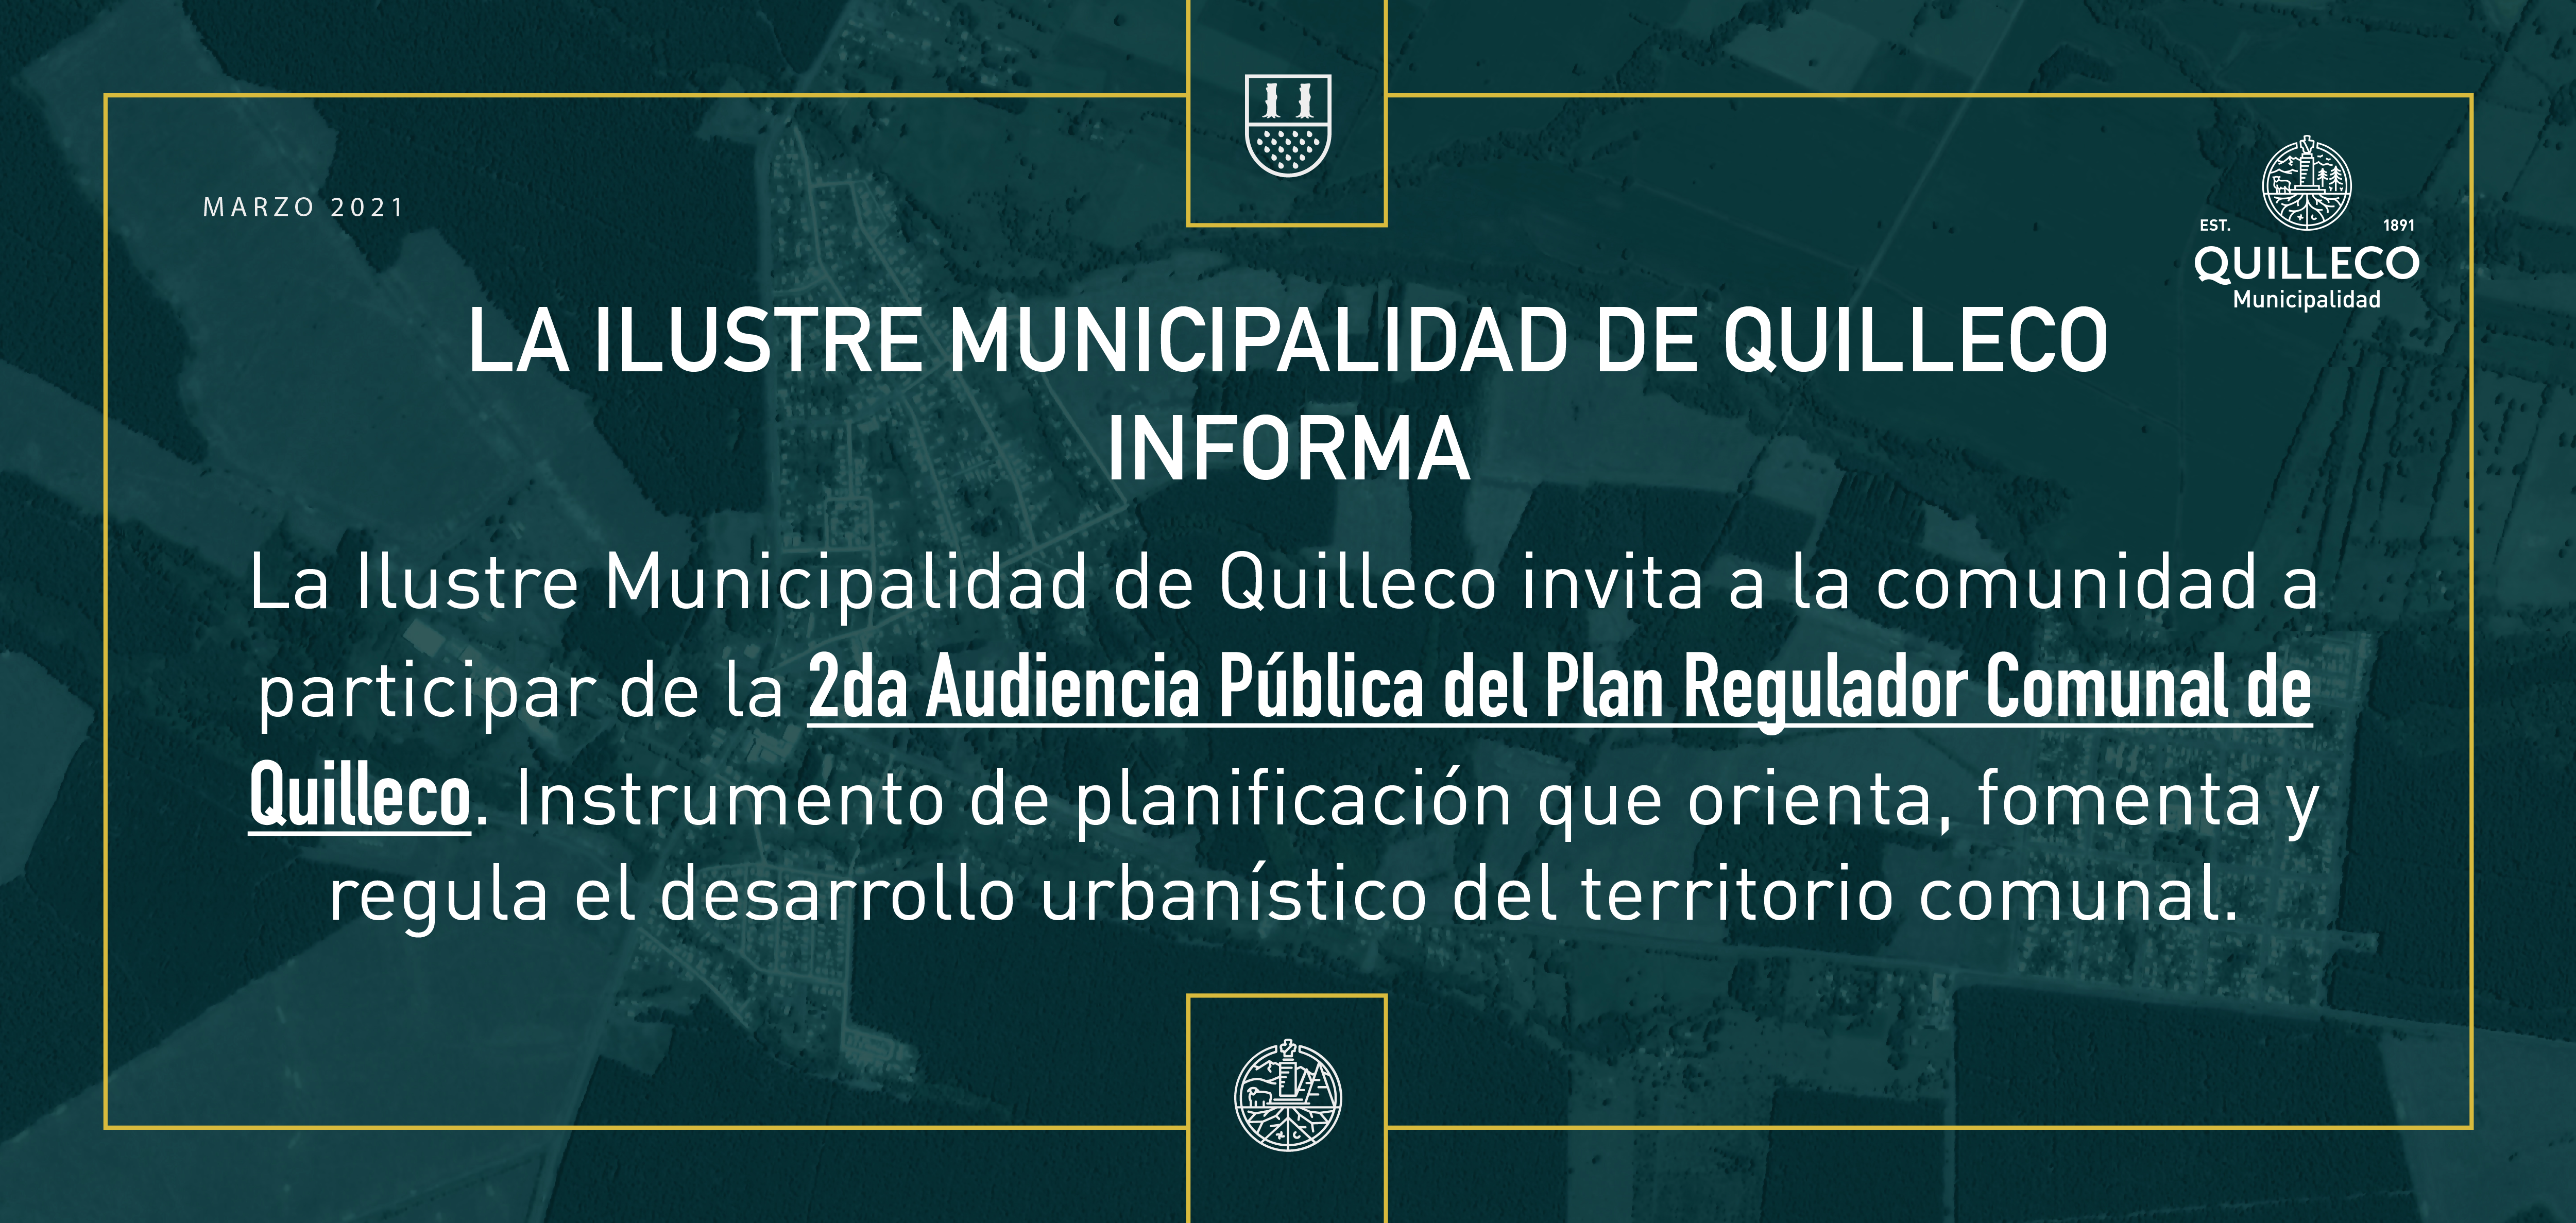 La Ilustre Municipalidad de Quilleco invita a la comunidad para participar de la 2da Audiencia Pública del Plan Regulador Comunal de Quilleco